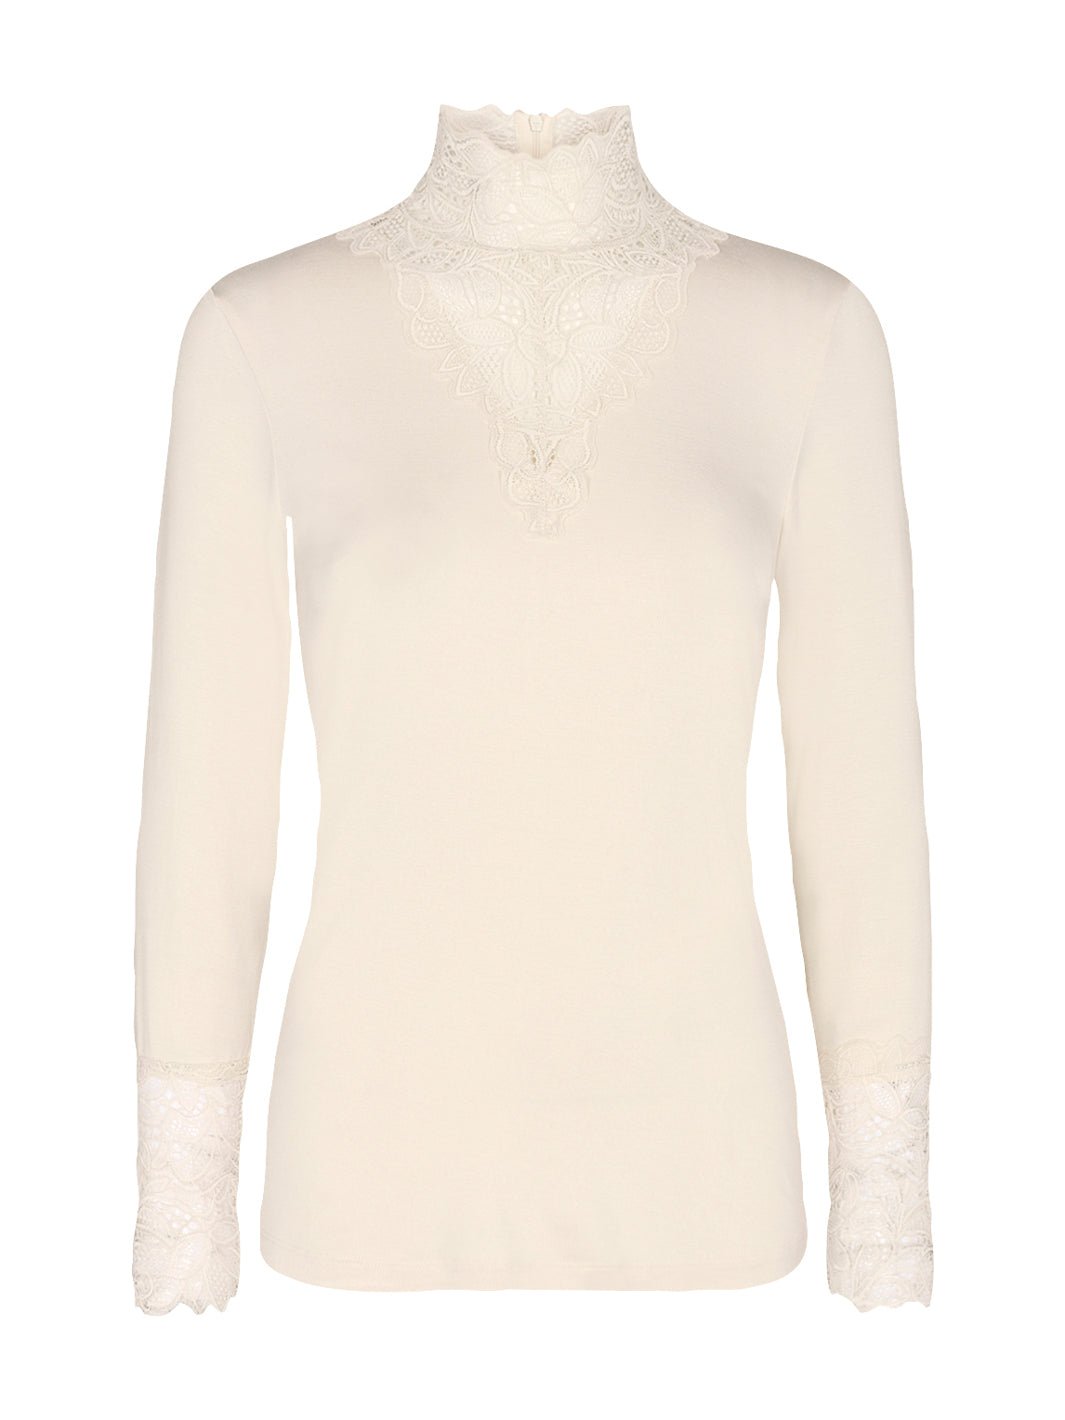 Soya Concept Marica 20 bluse cream - Online-Mode